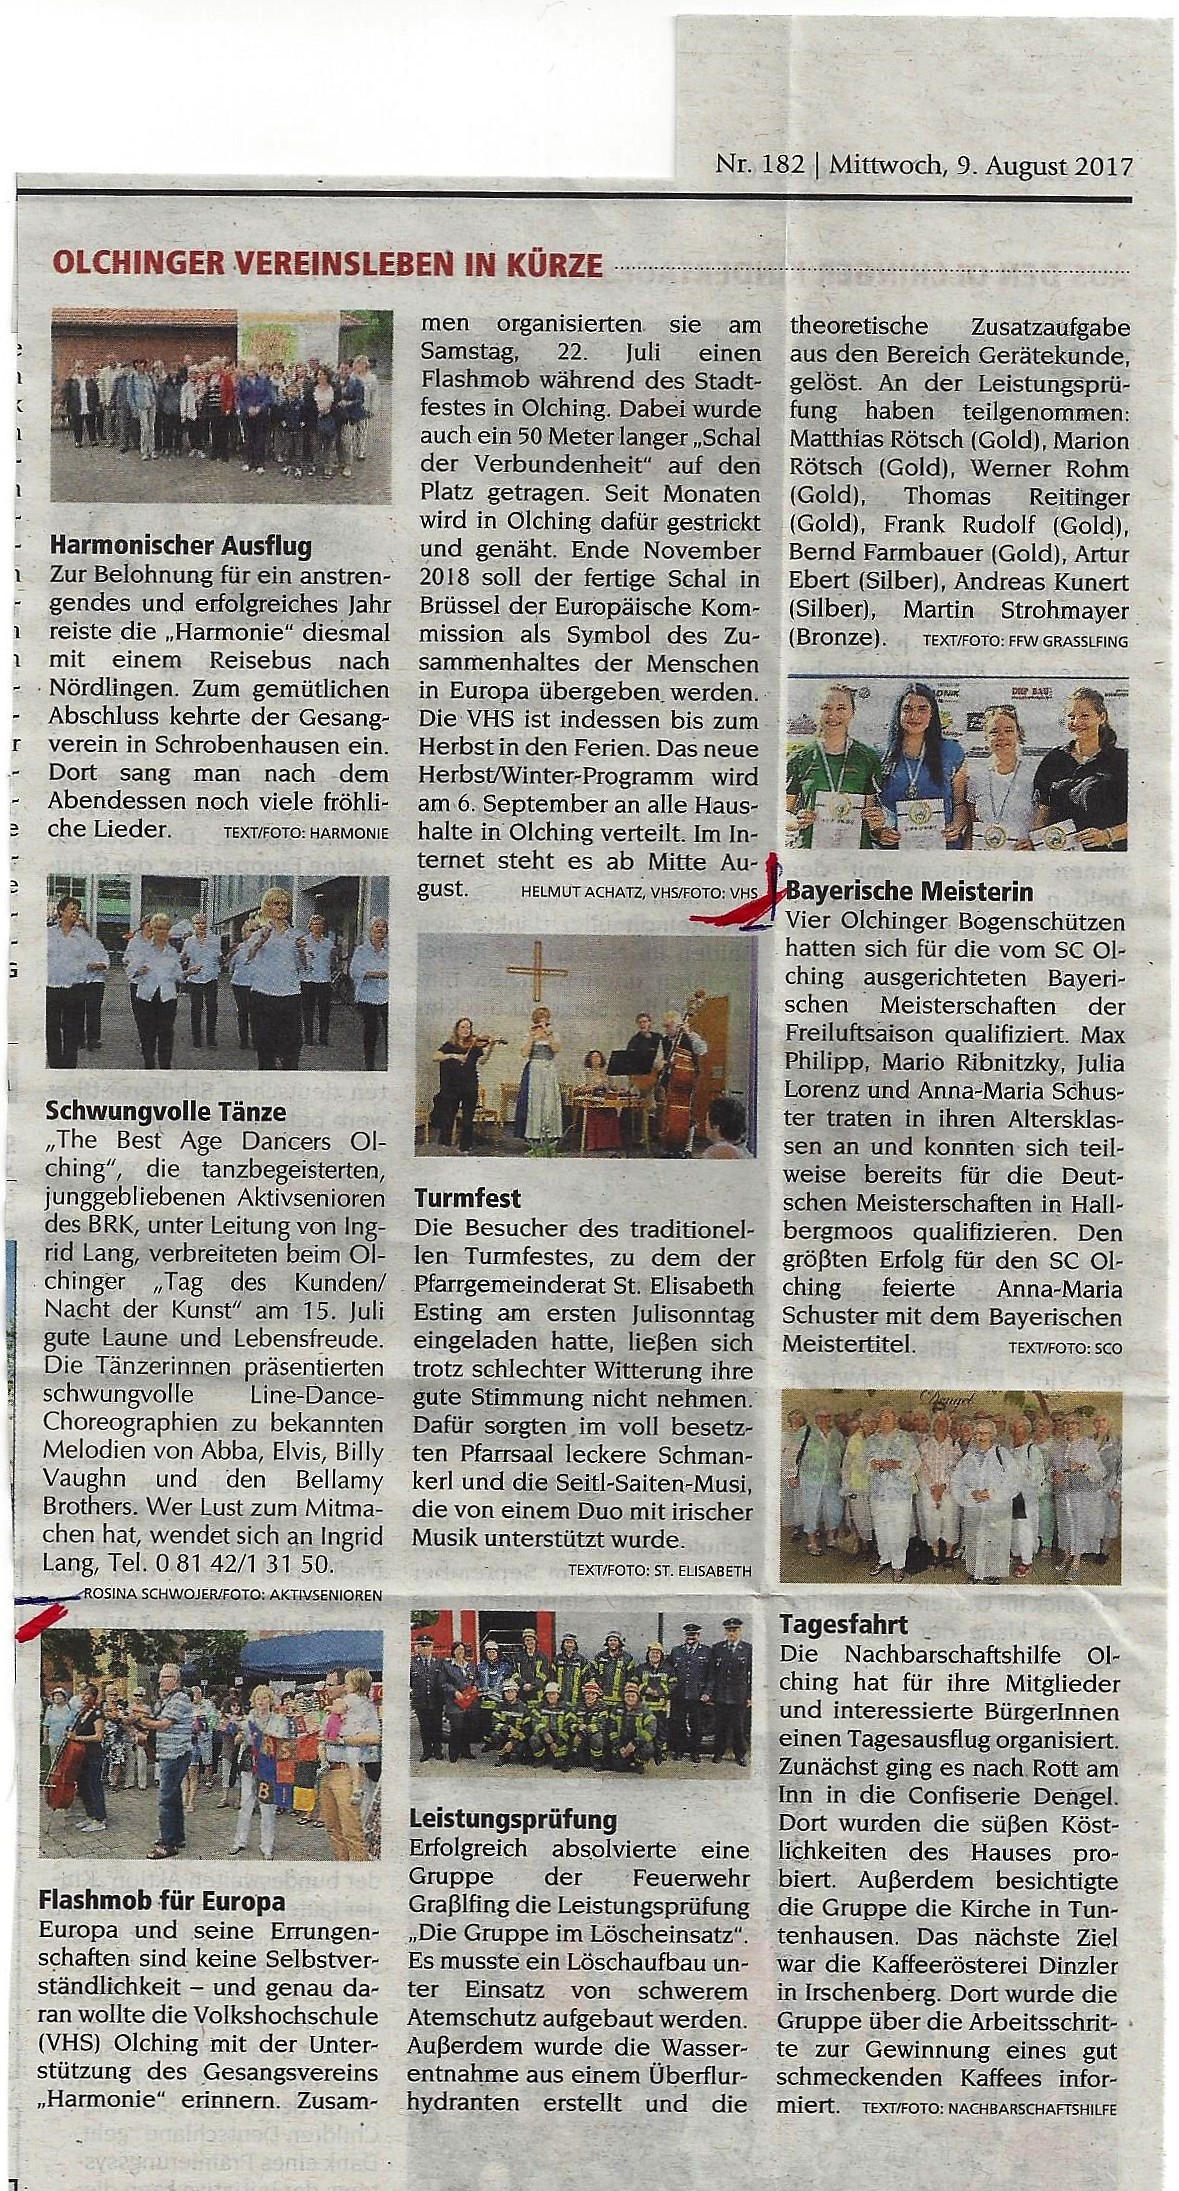 Flashmob-Mitteilungsblatt-09.08.17-1